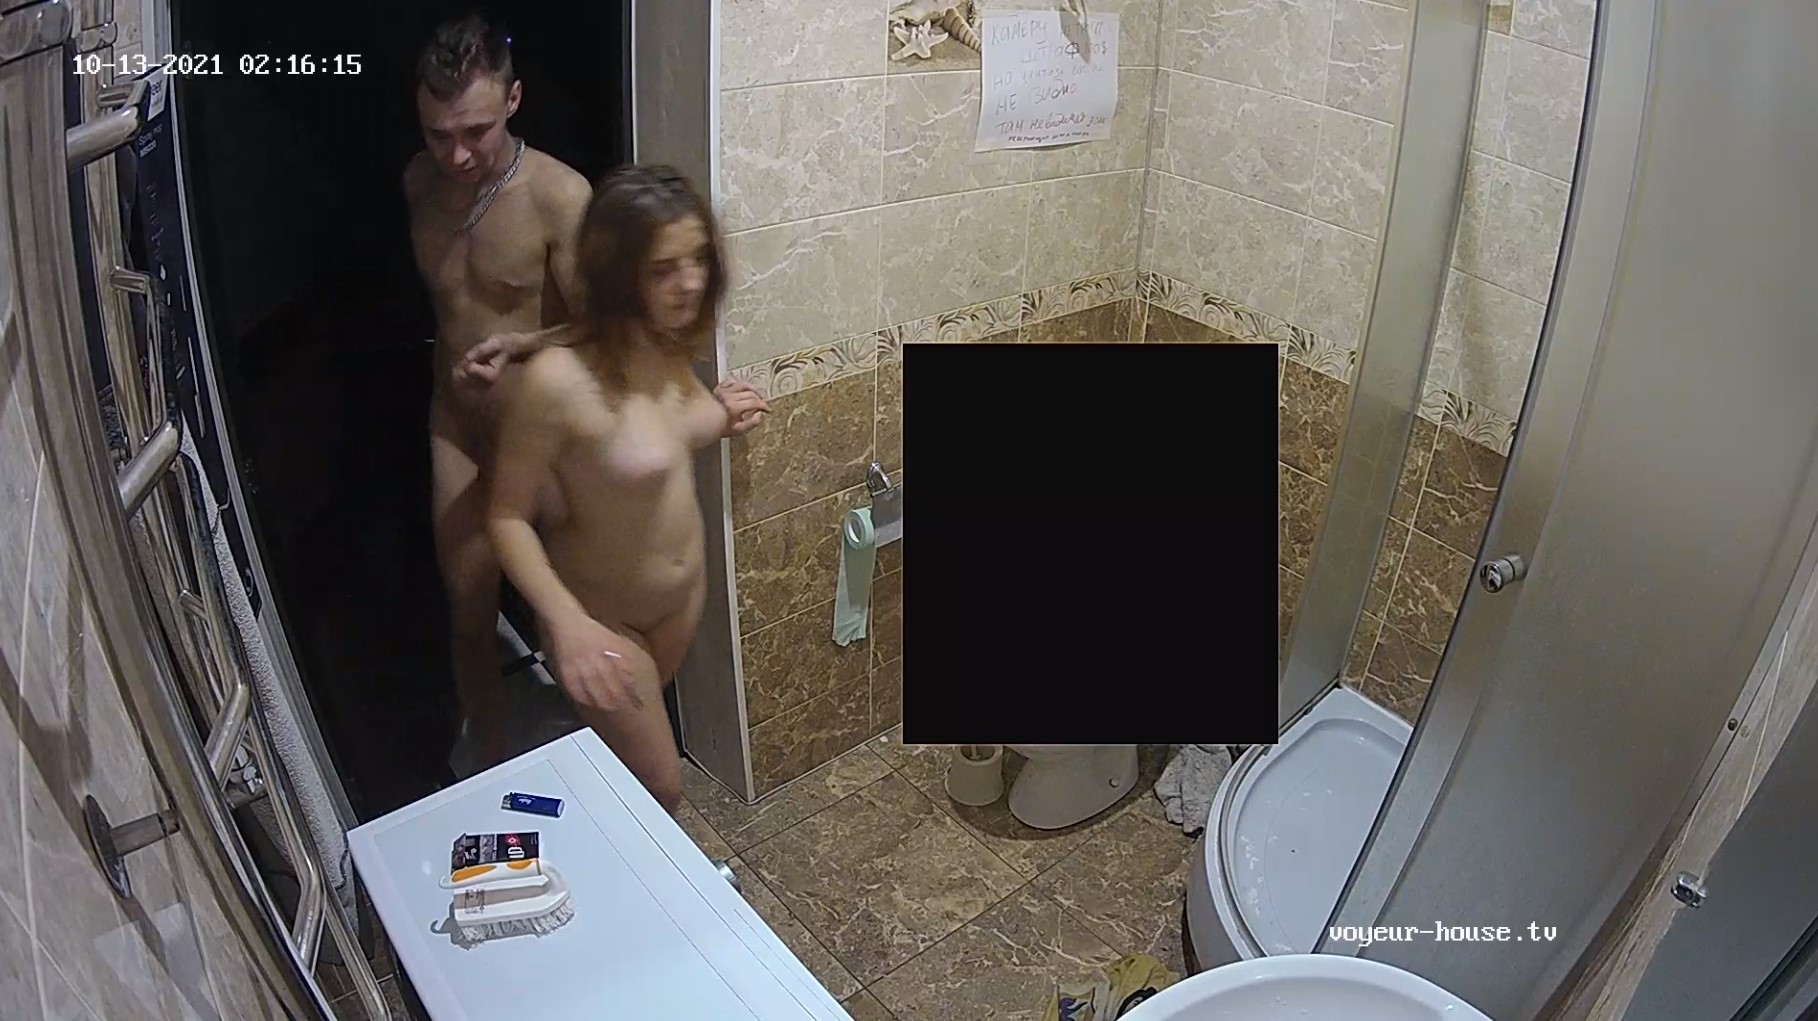 Nikol drunk shower after sex, Oct13/21